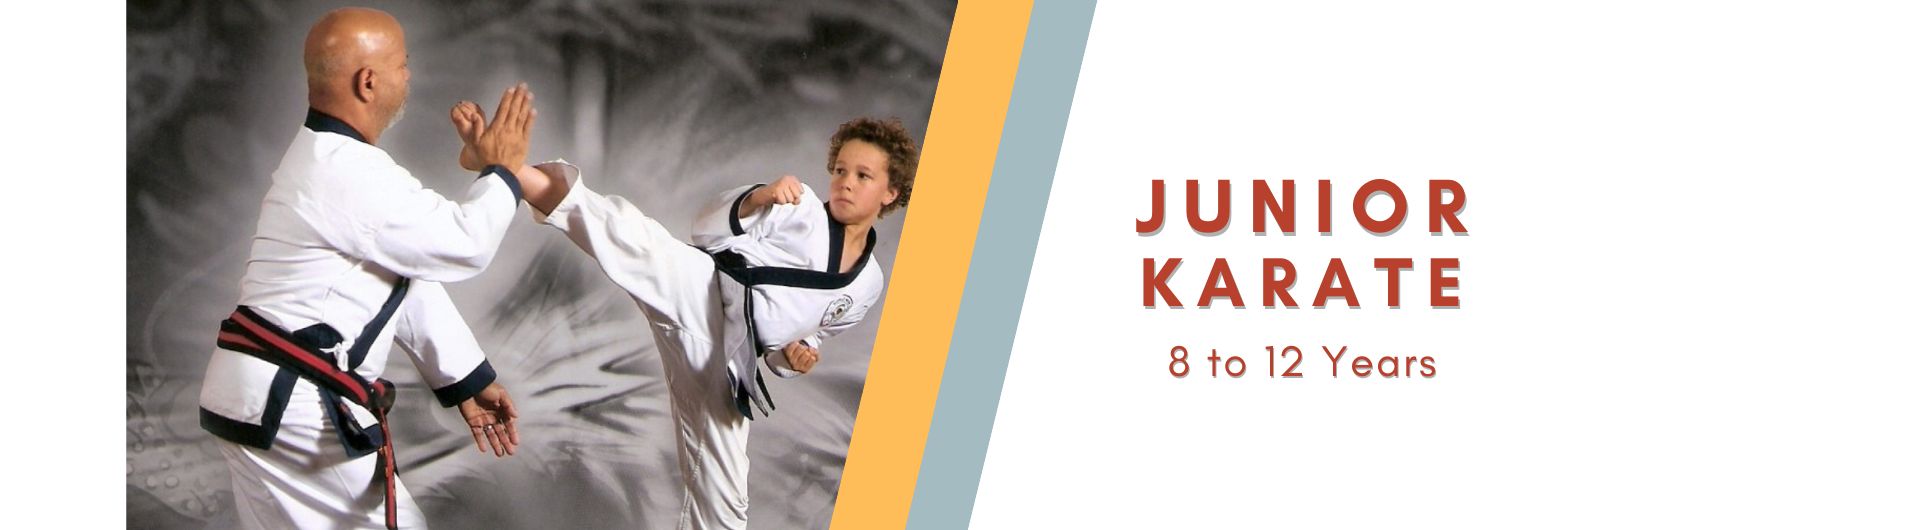 Junior Karate, Junior Kickboxing, Junior Martial Arts